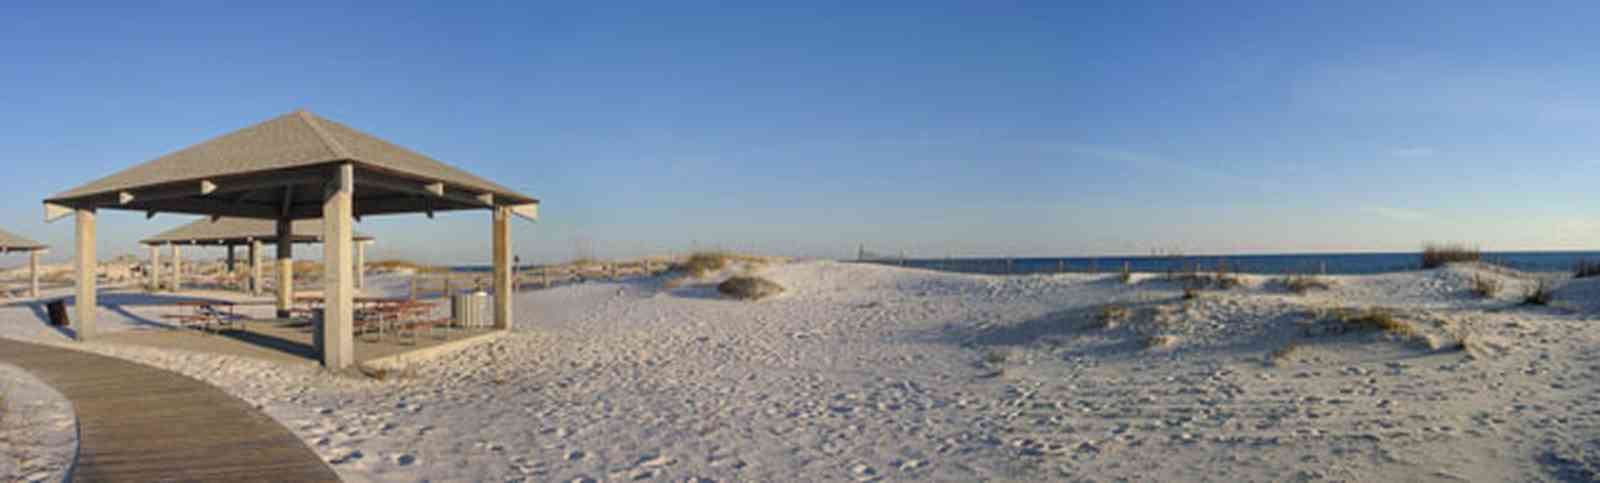 Gulf-Islands-National-Seashore:-Opal-Beach_02.jpg:  dune, walkway, gulf of mexico, shelter